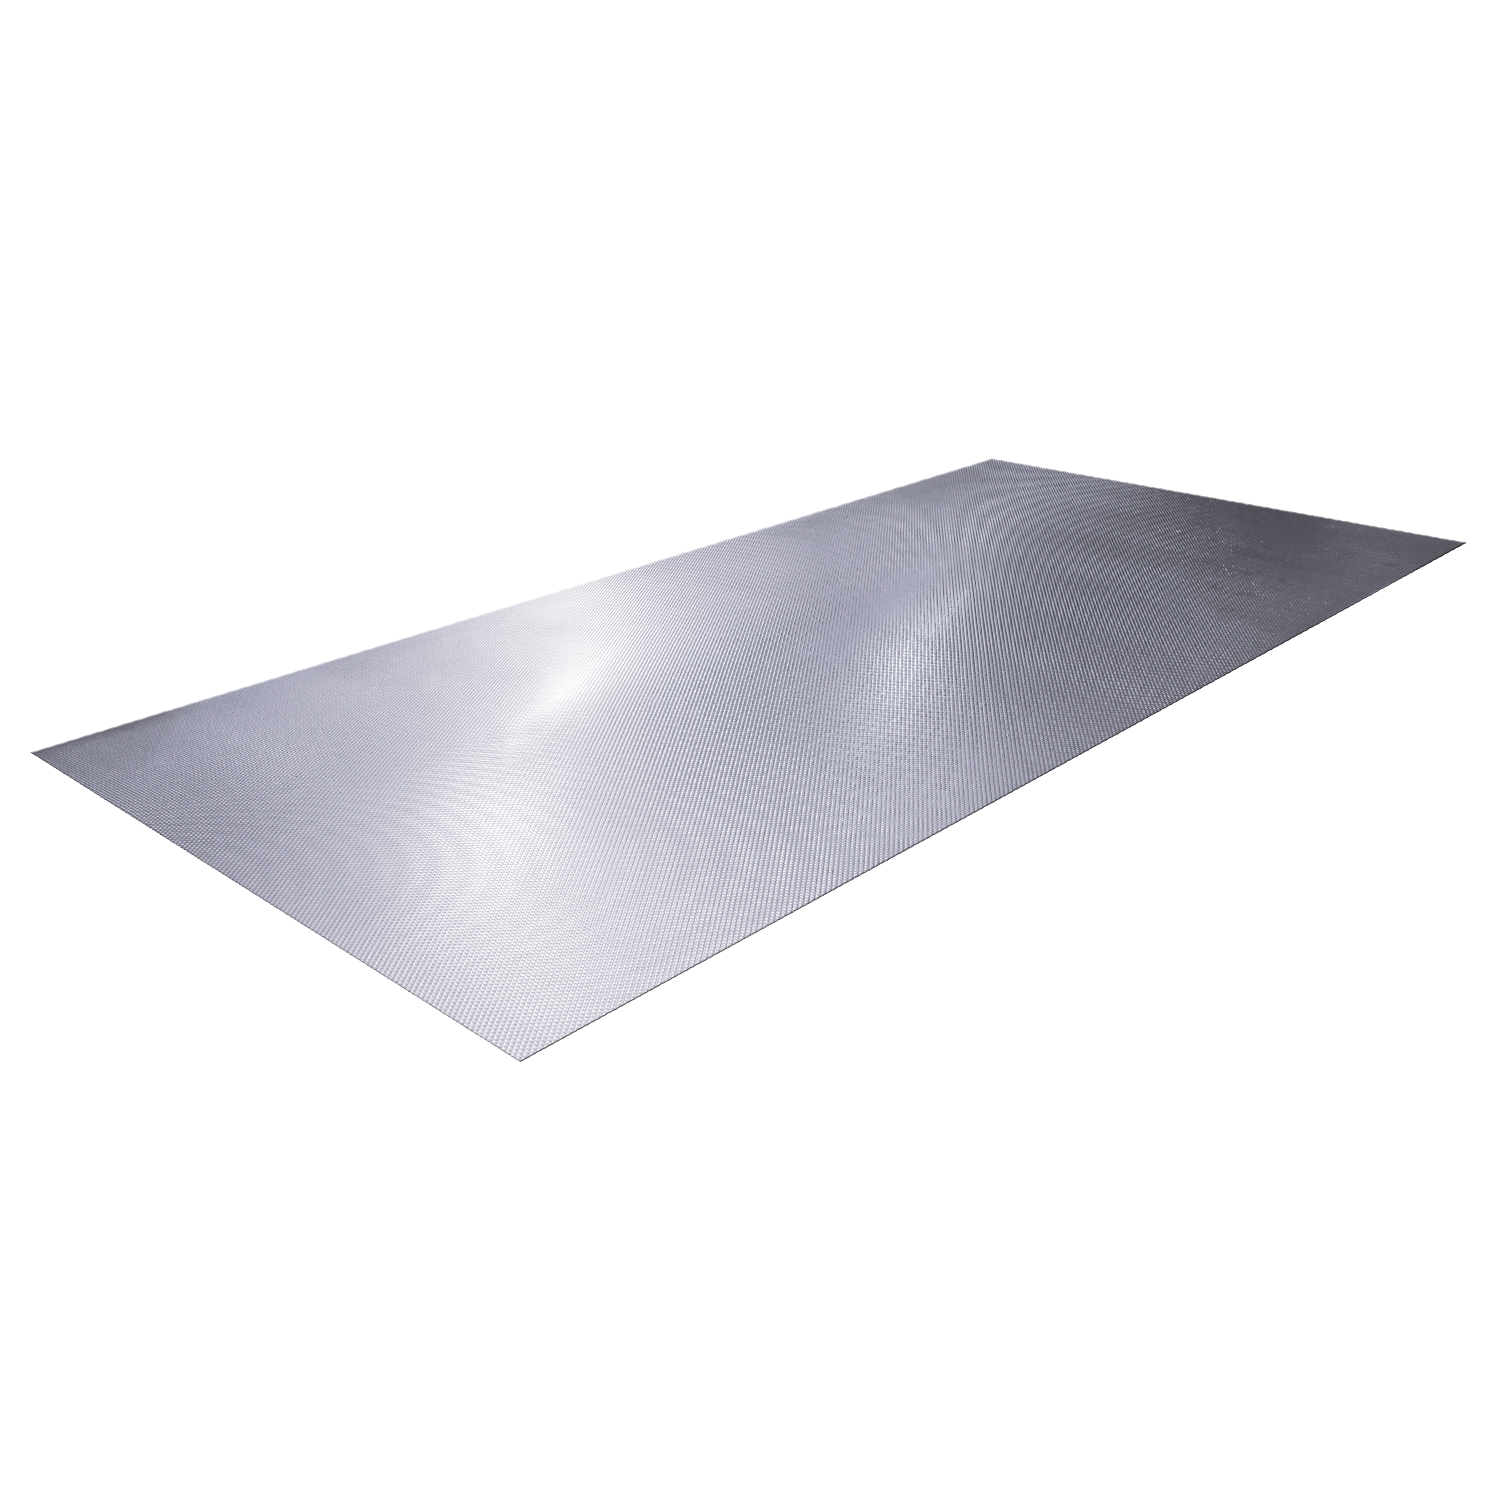 16GA Rigidized Steel Sheets - Pneumatic Innovations LLC